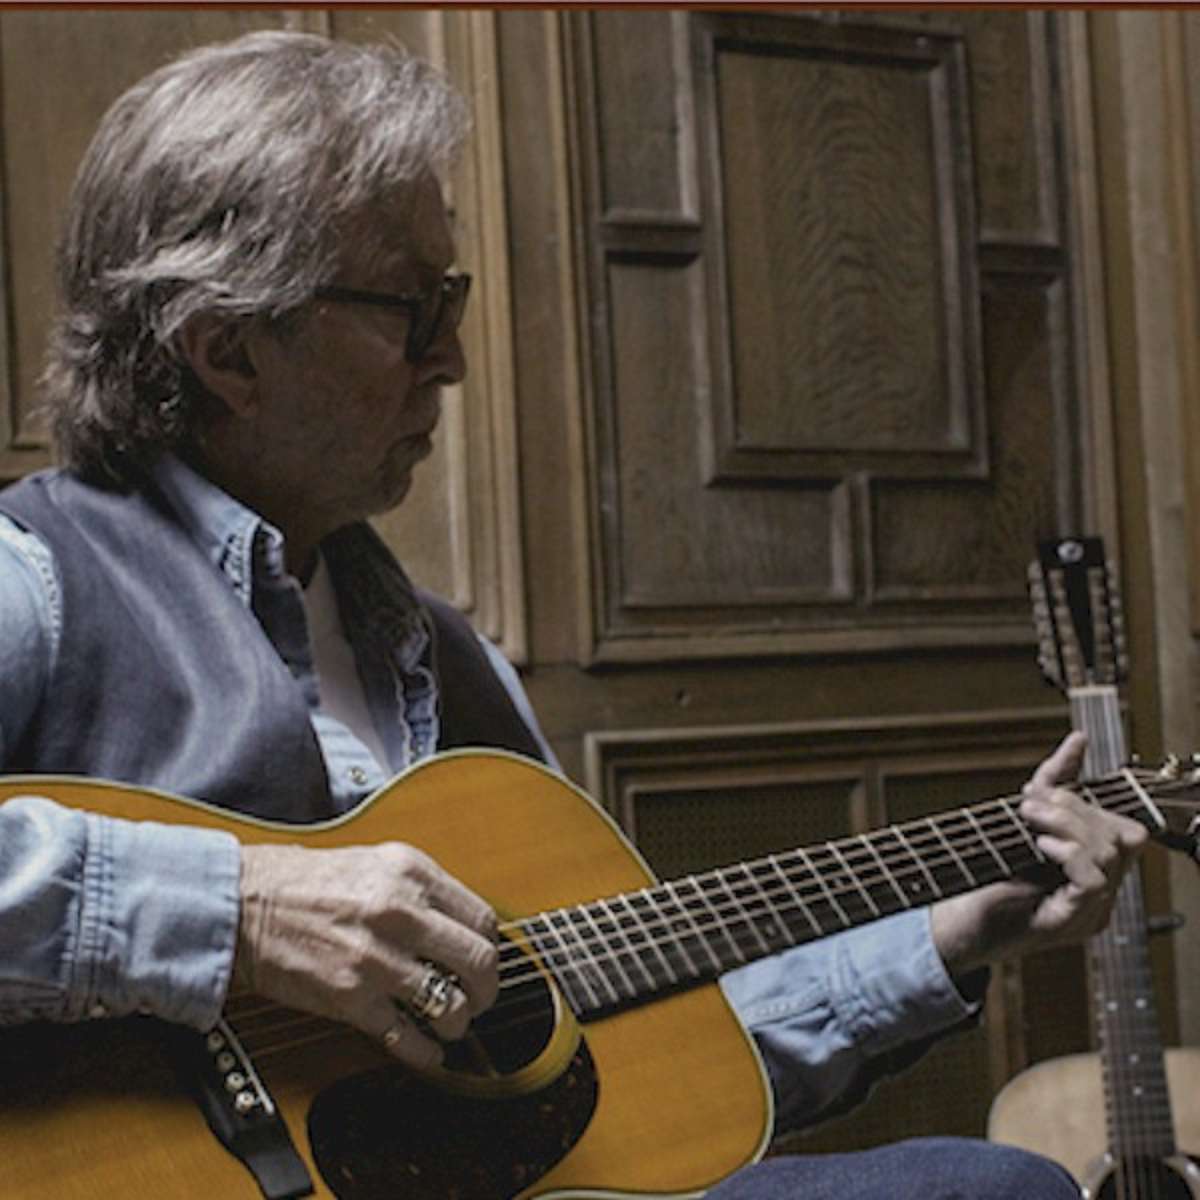 Conheça a história da música Tears In Heaven, de Eric Clapton